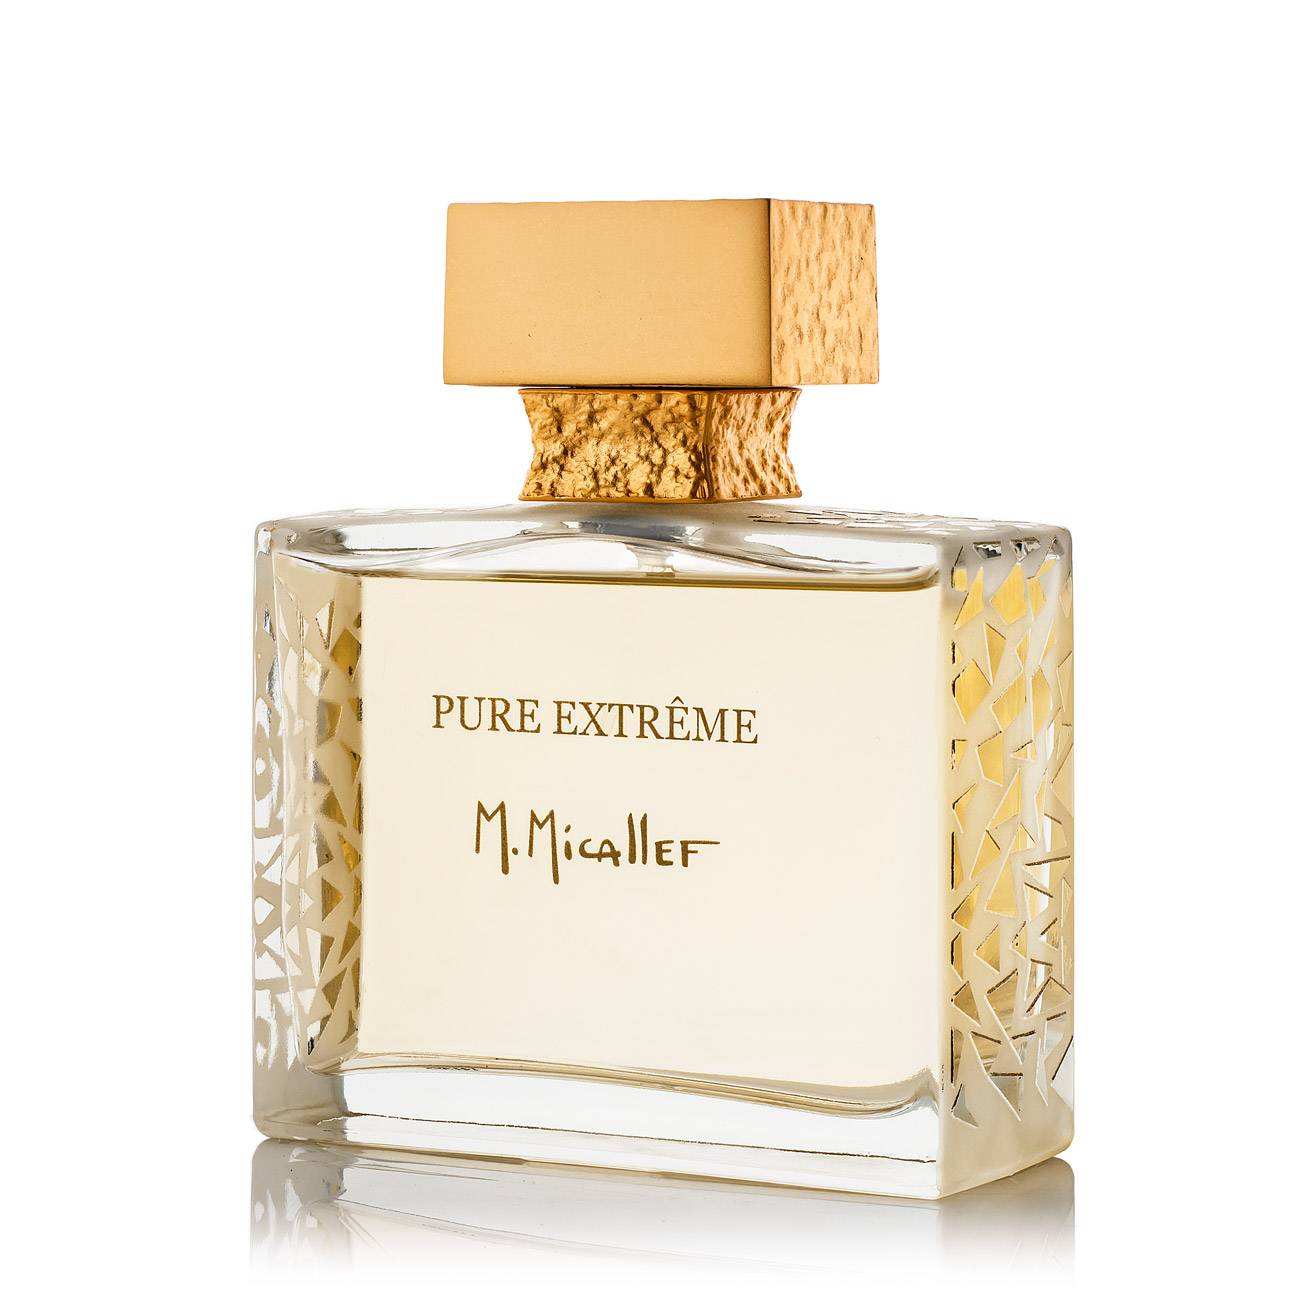 Parfum de niche M. Micallef PURE EXTREME 100ml cu comanda online